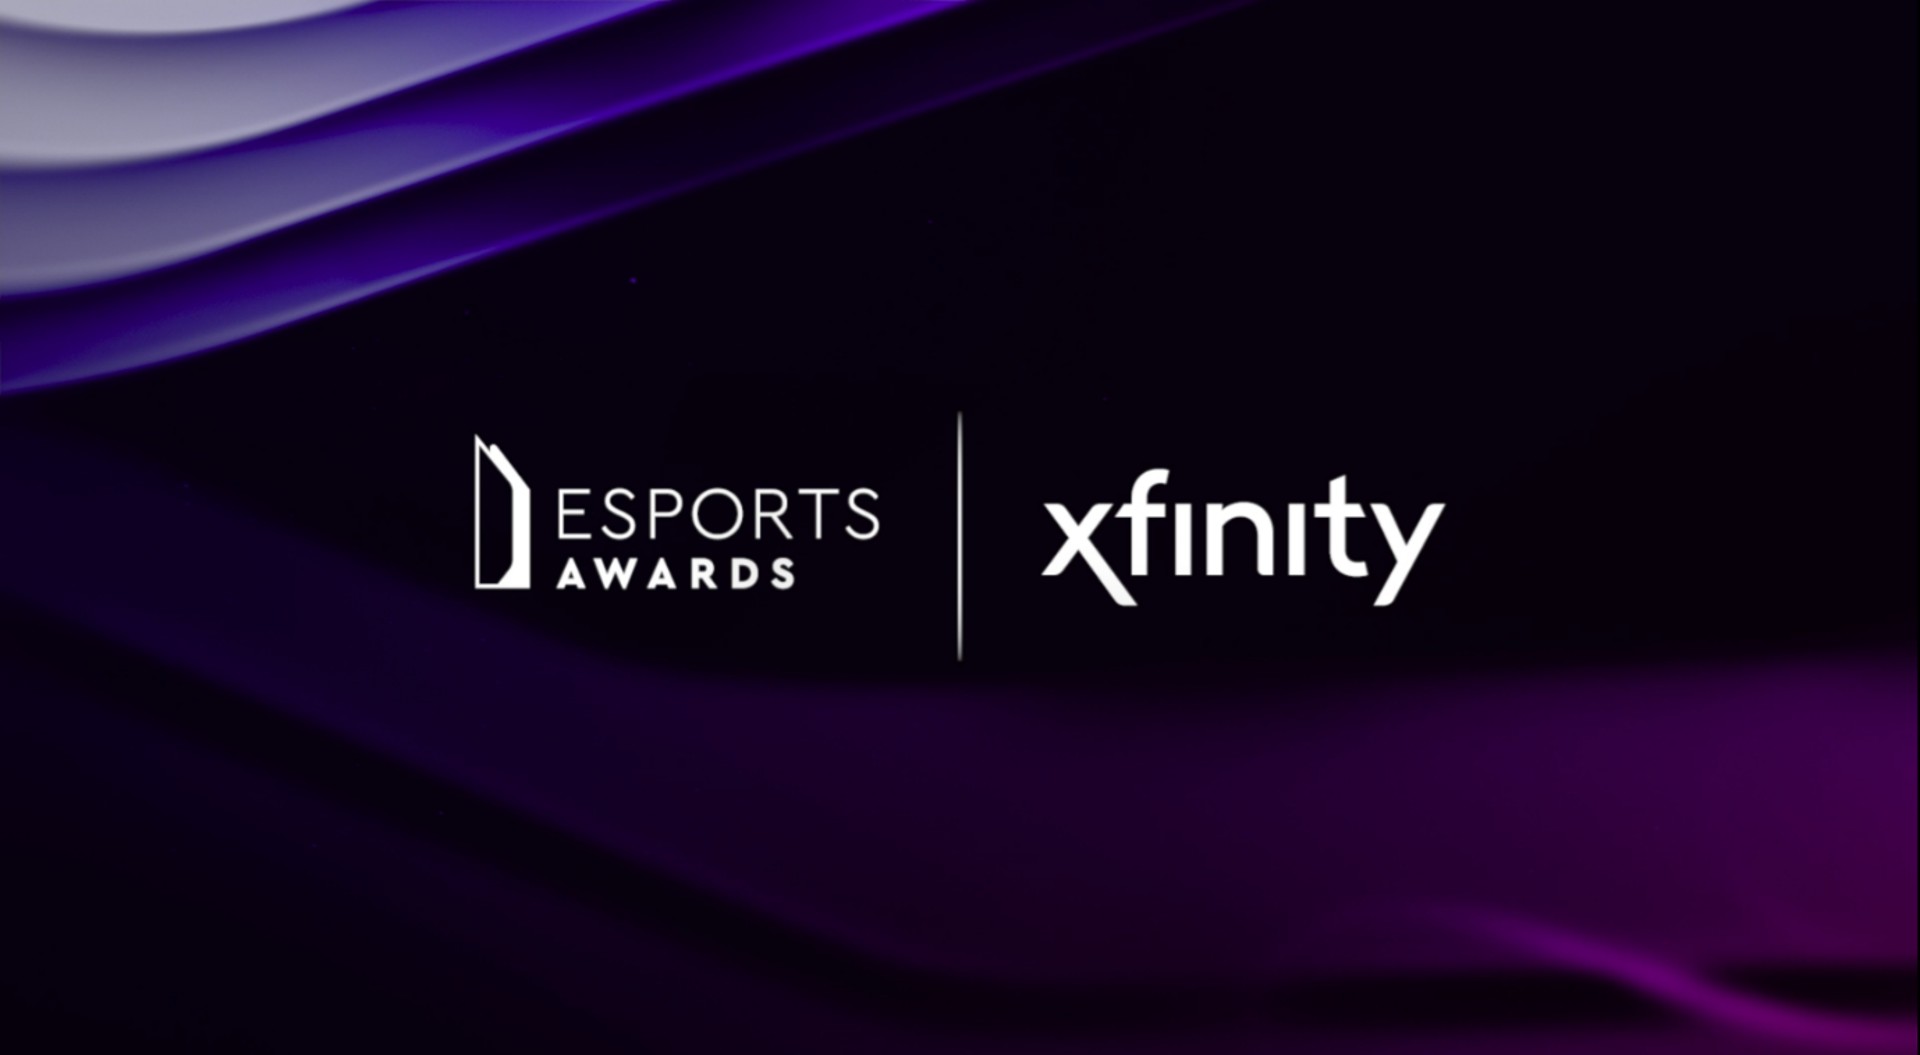 Esports Awards names Xfinity as supporting partner